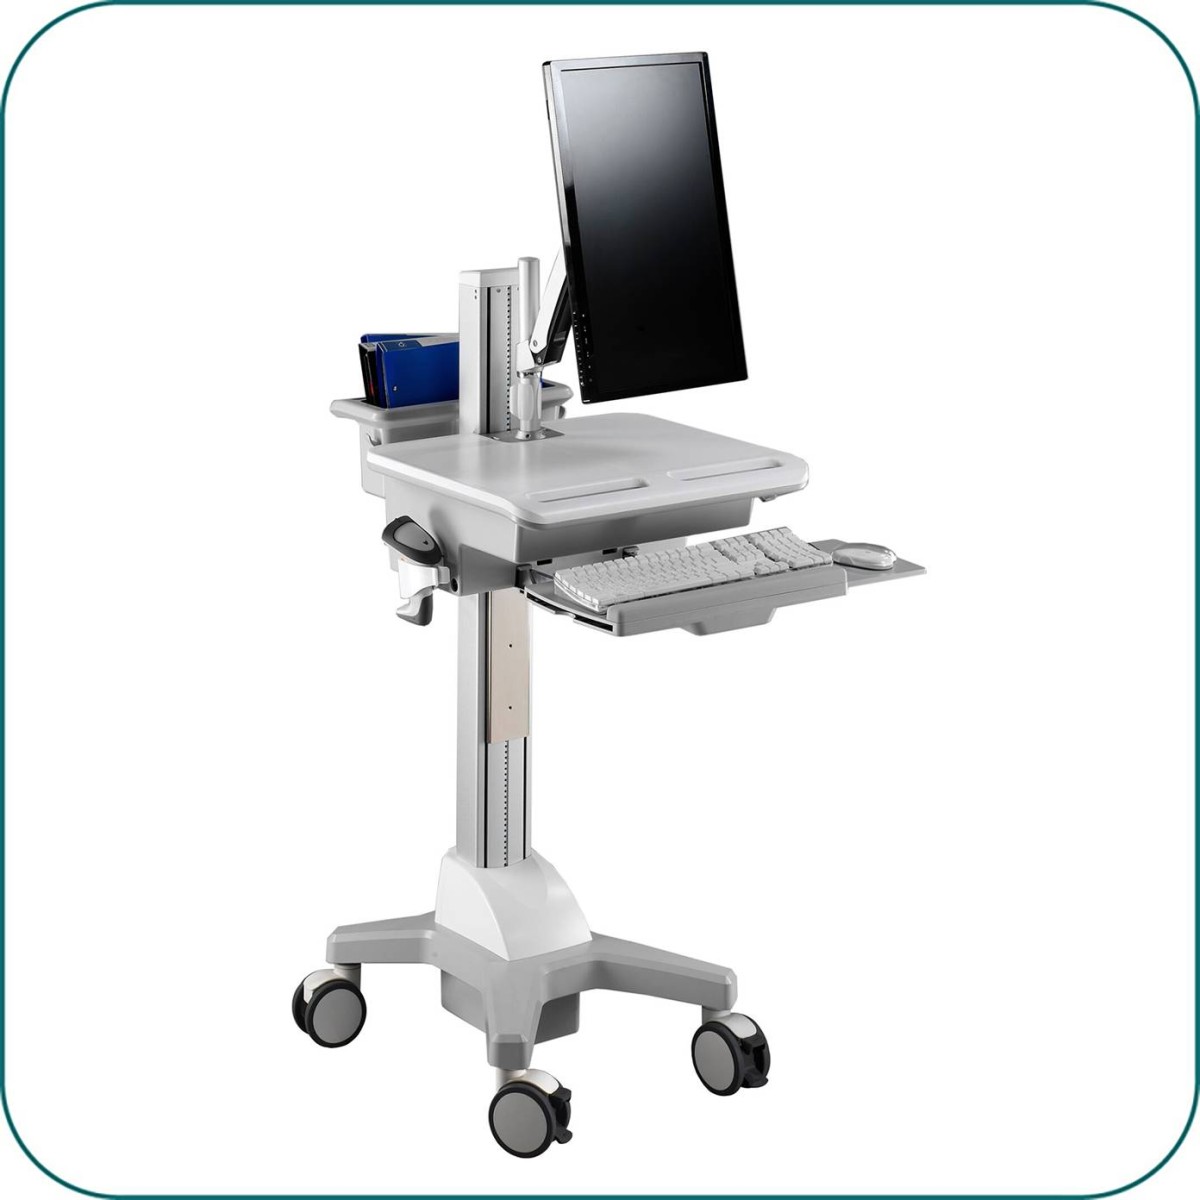 Aavara CNR01 Mobile Medical Cart - Single Monitor Arm type